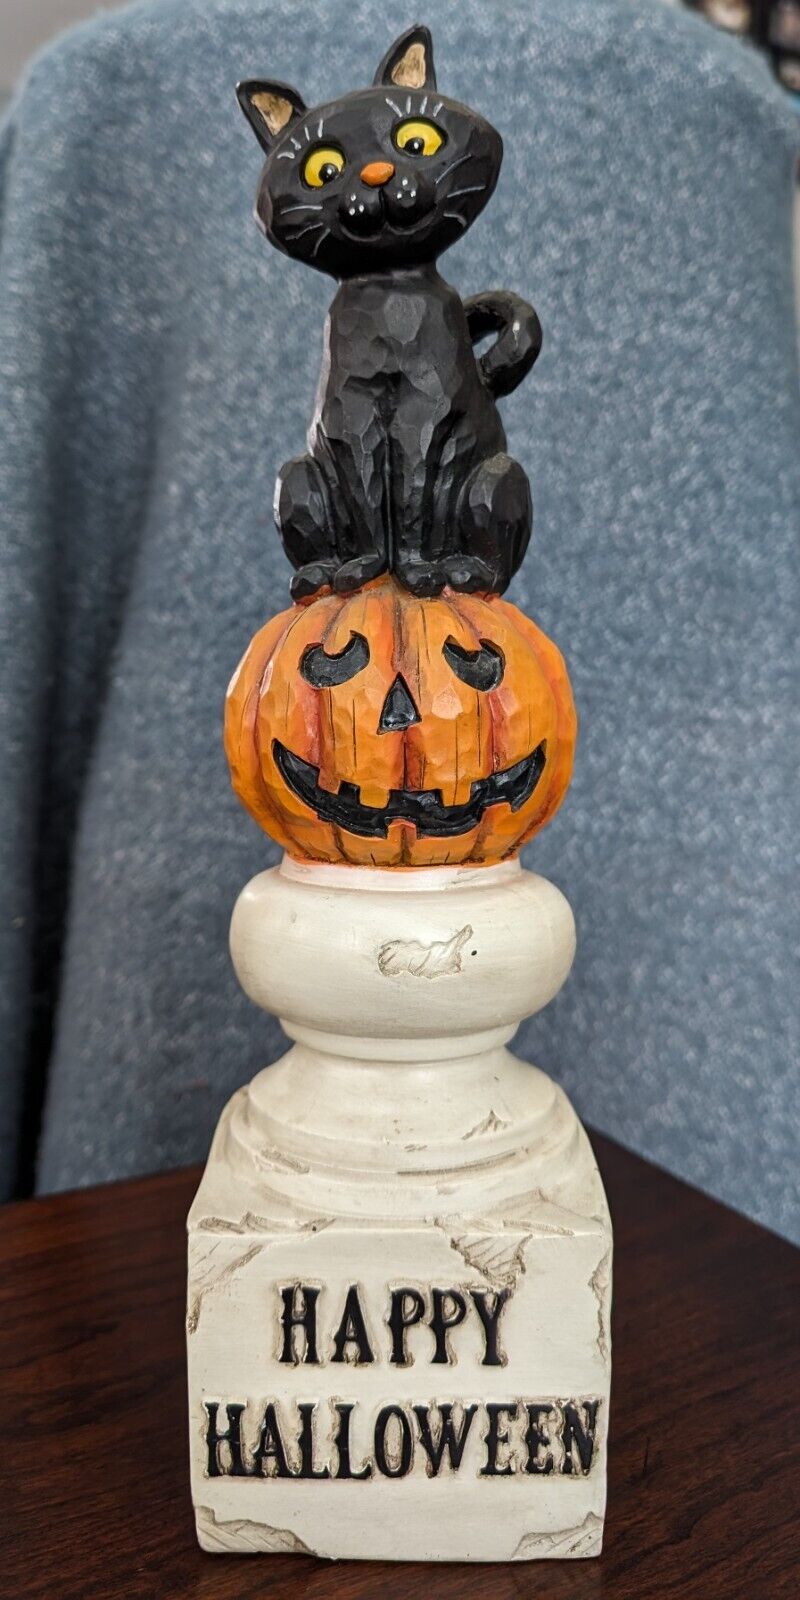 Happy Halloween cat and pumpkin decoration